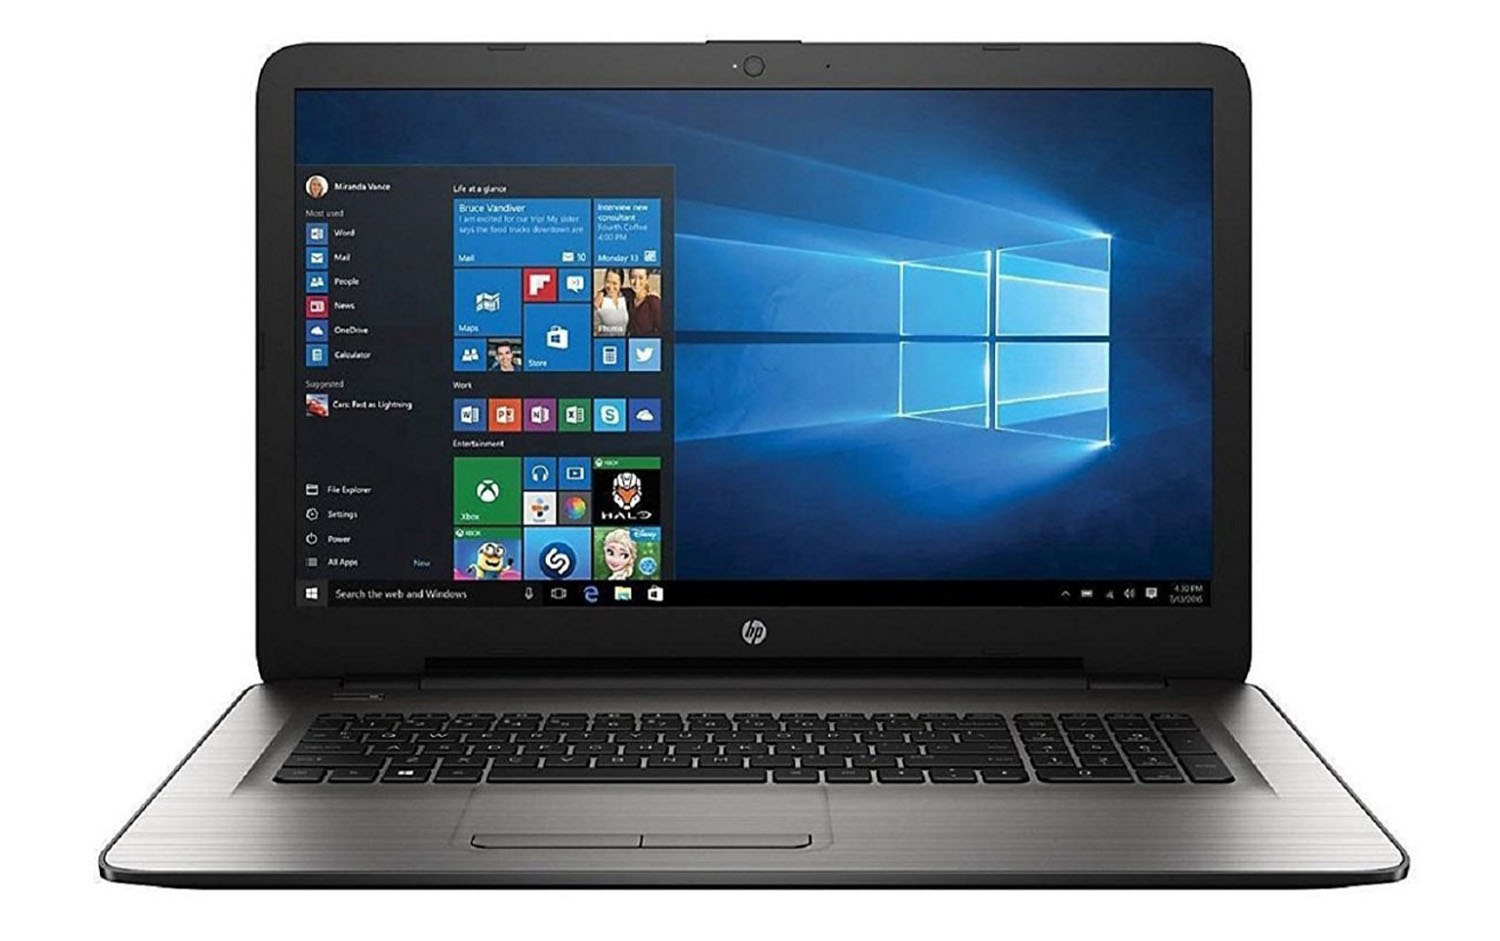 HP Notebook 15 ay126nr Intel Core i7 7th Gen 8GB RAM 1TB HDD Windows 10 Pro